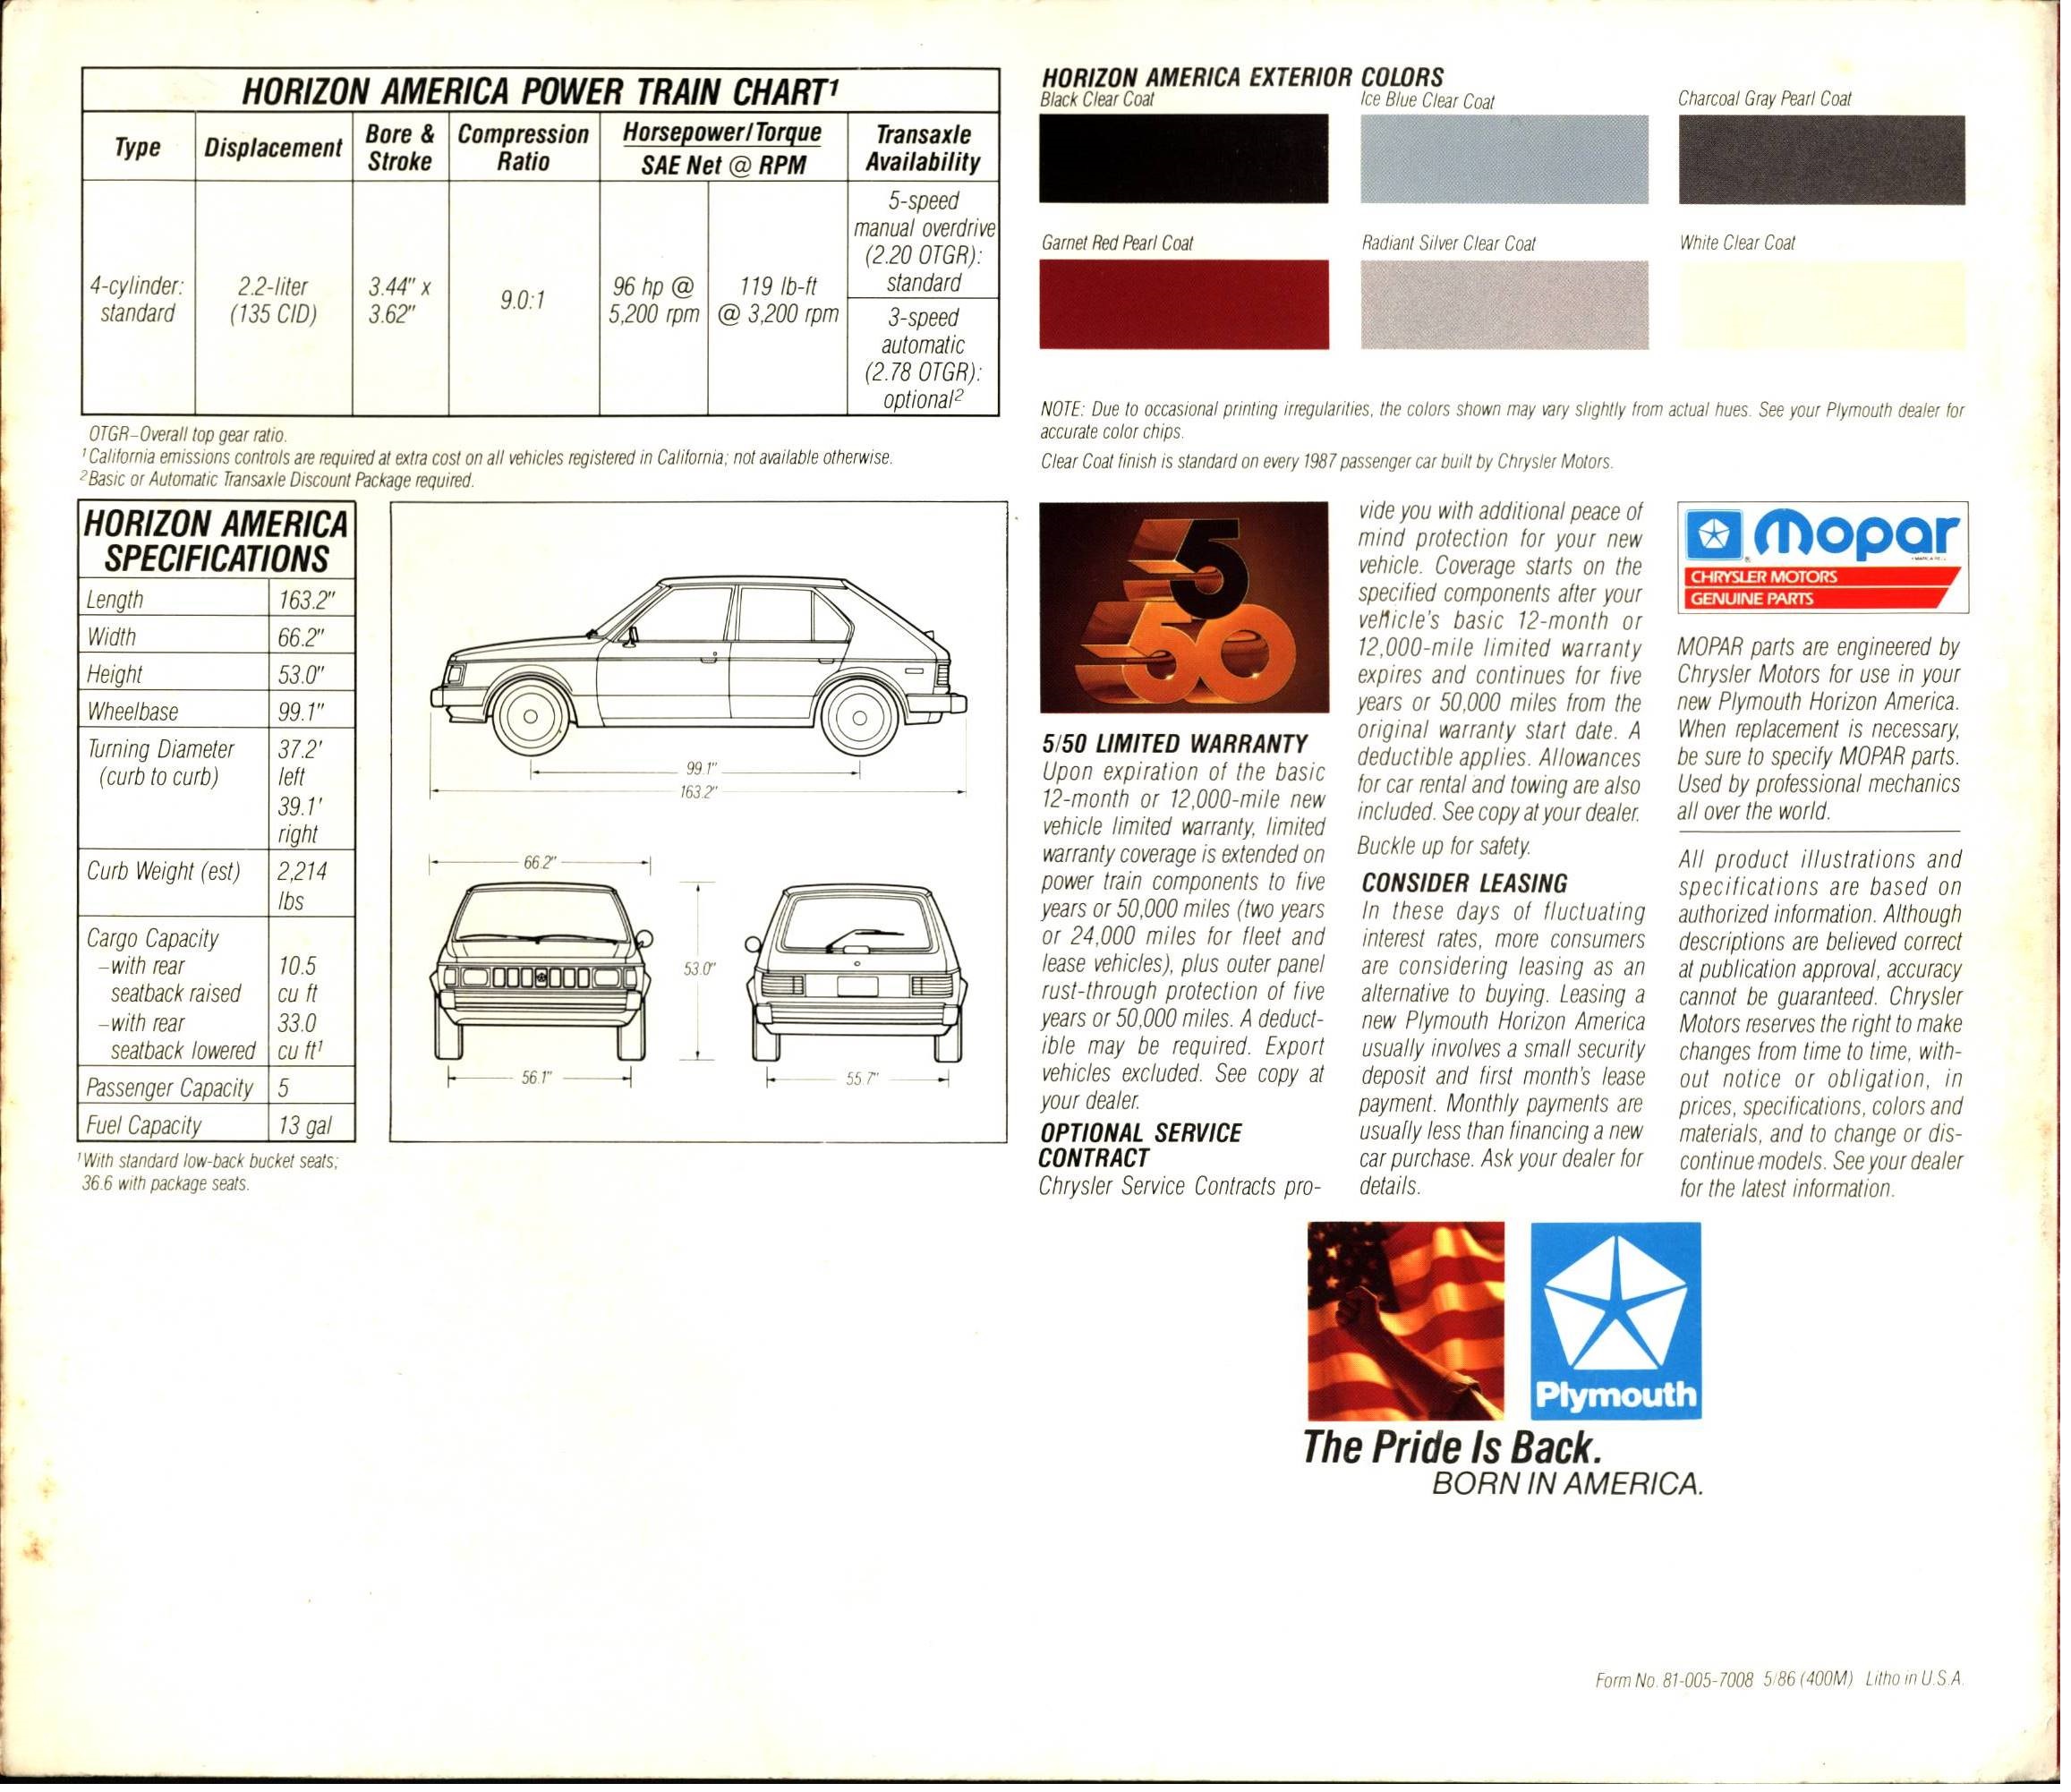 1987 Plymouth Horizon America Brochure 06